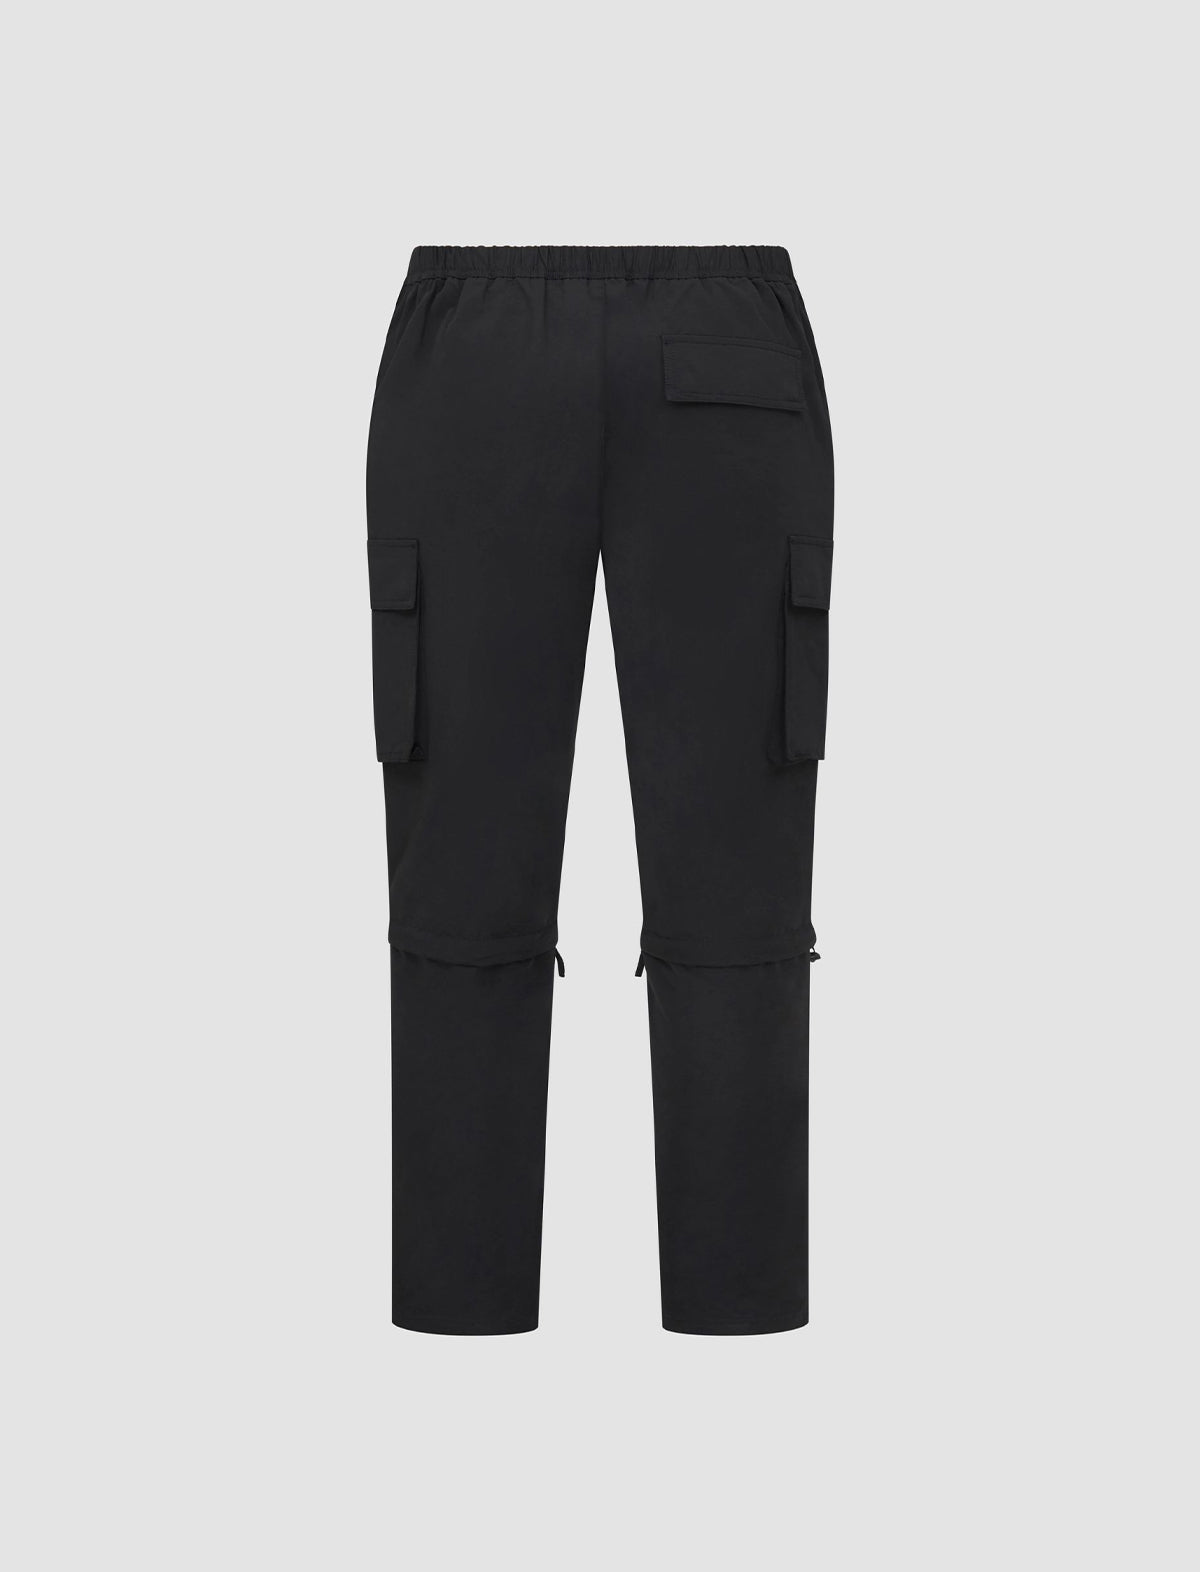 MANORS GOLF Zip Off Tech-Plus Four Pants in Black